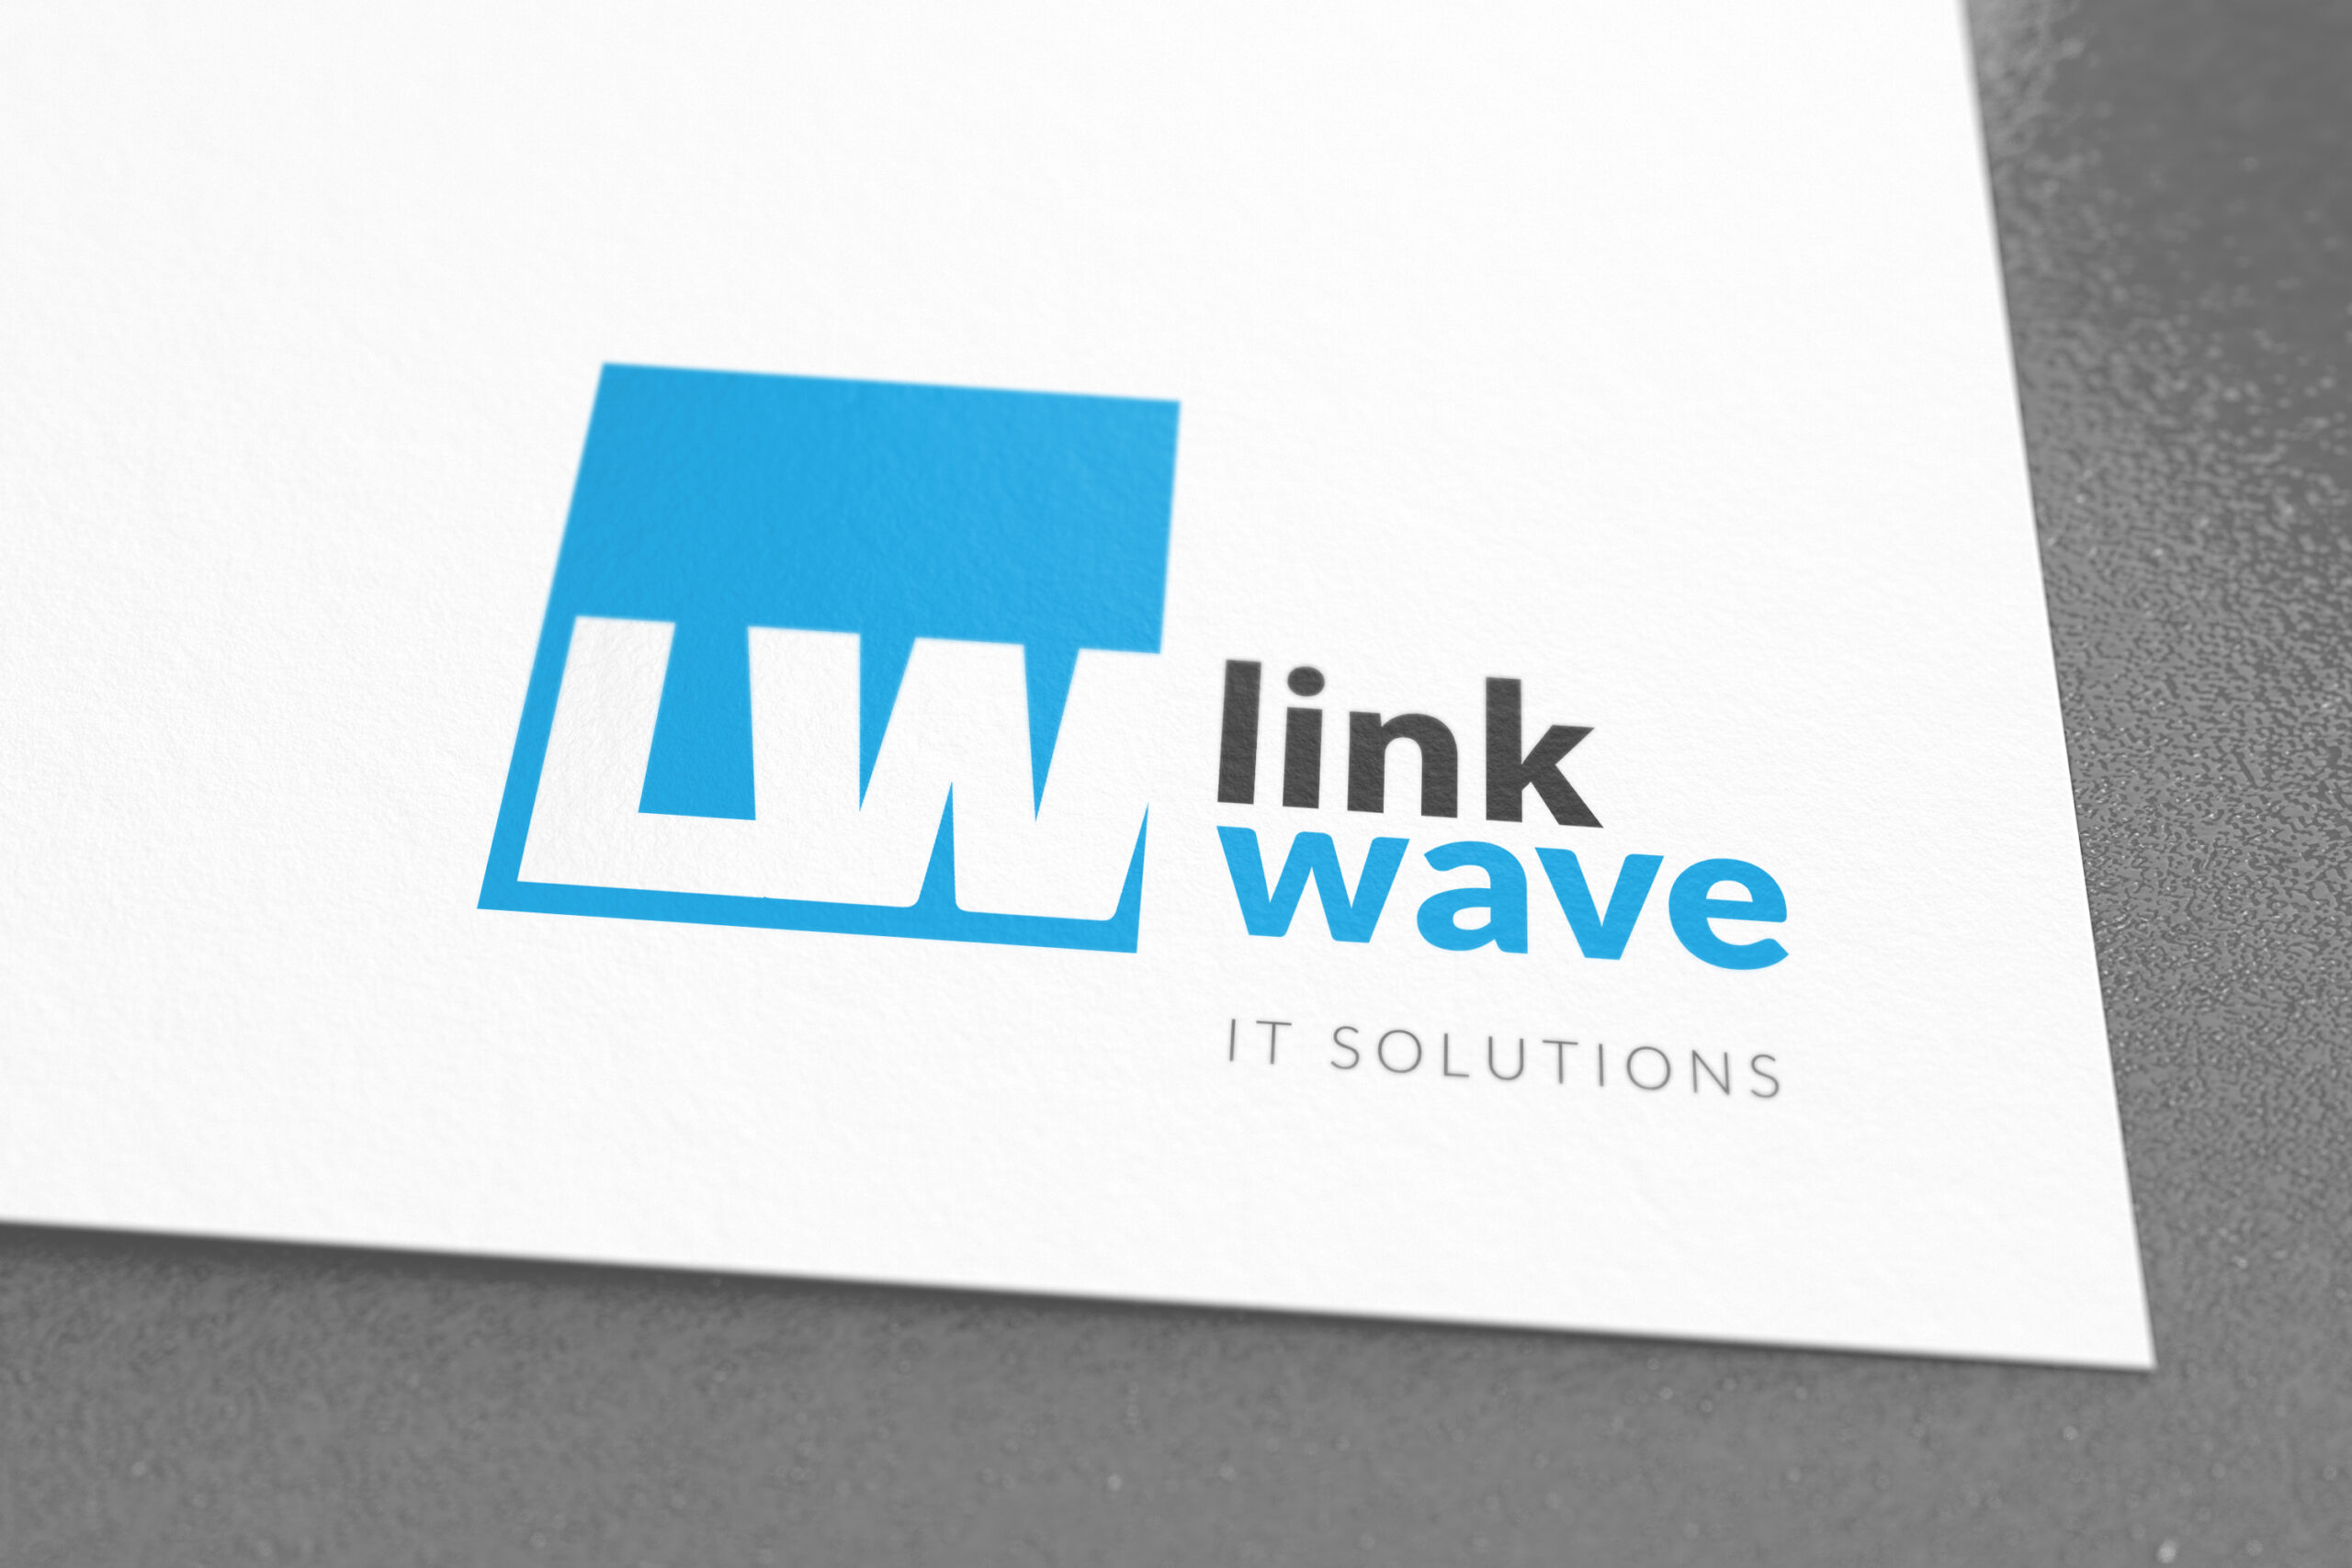 LinkWave